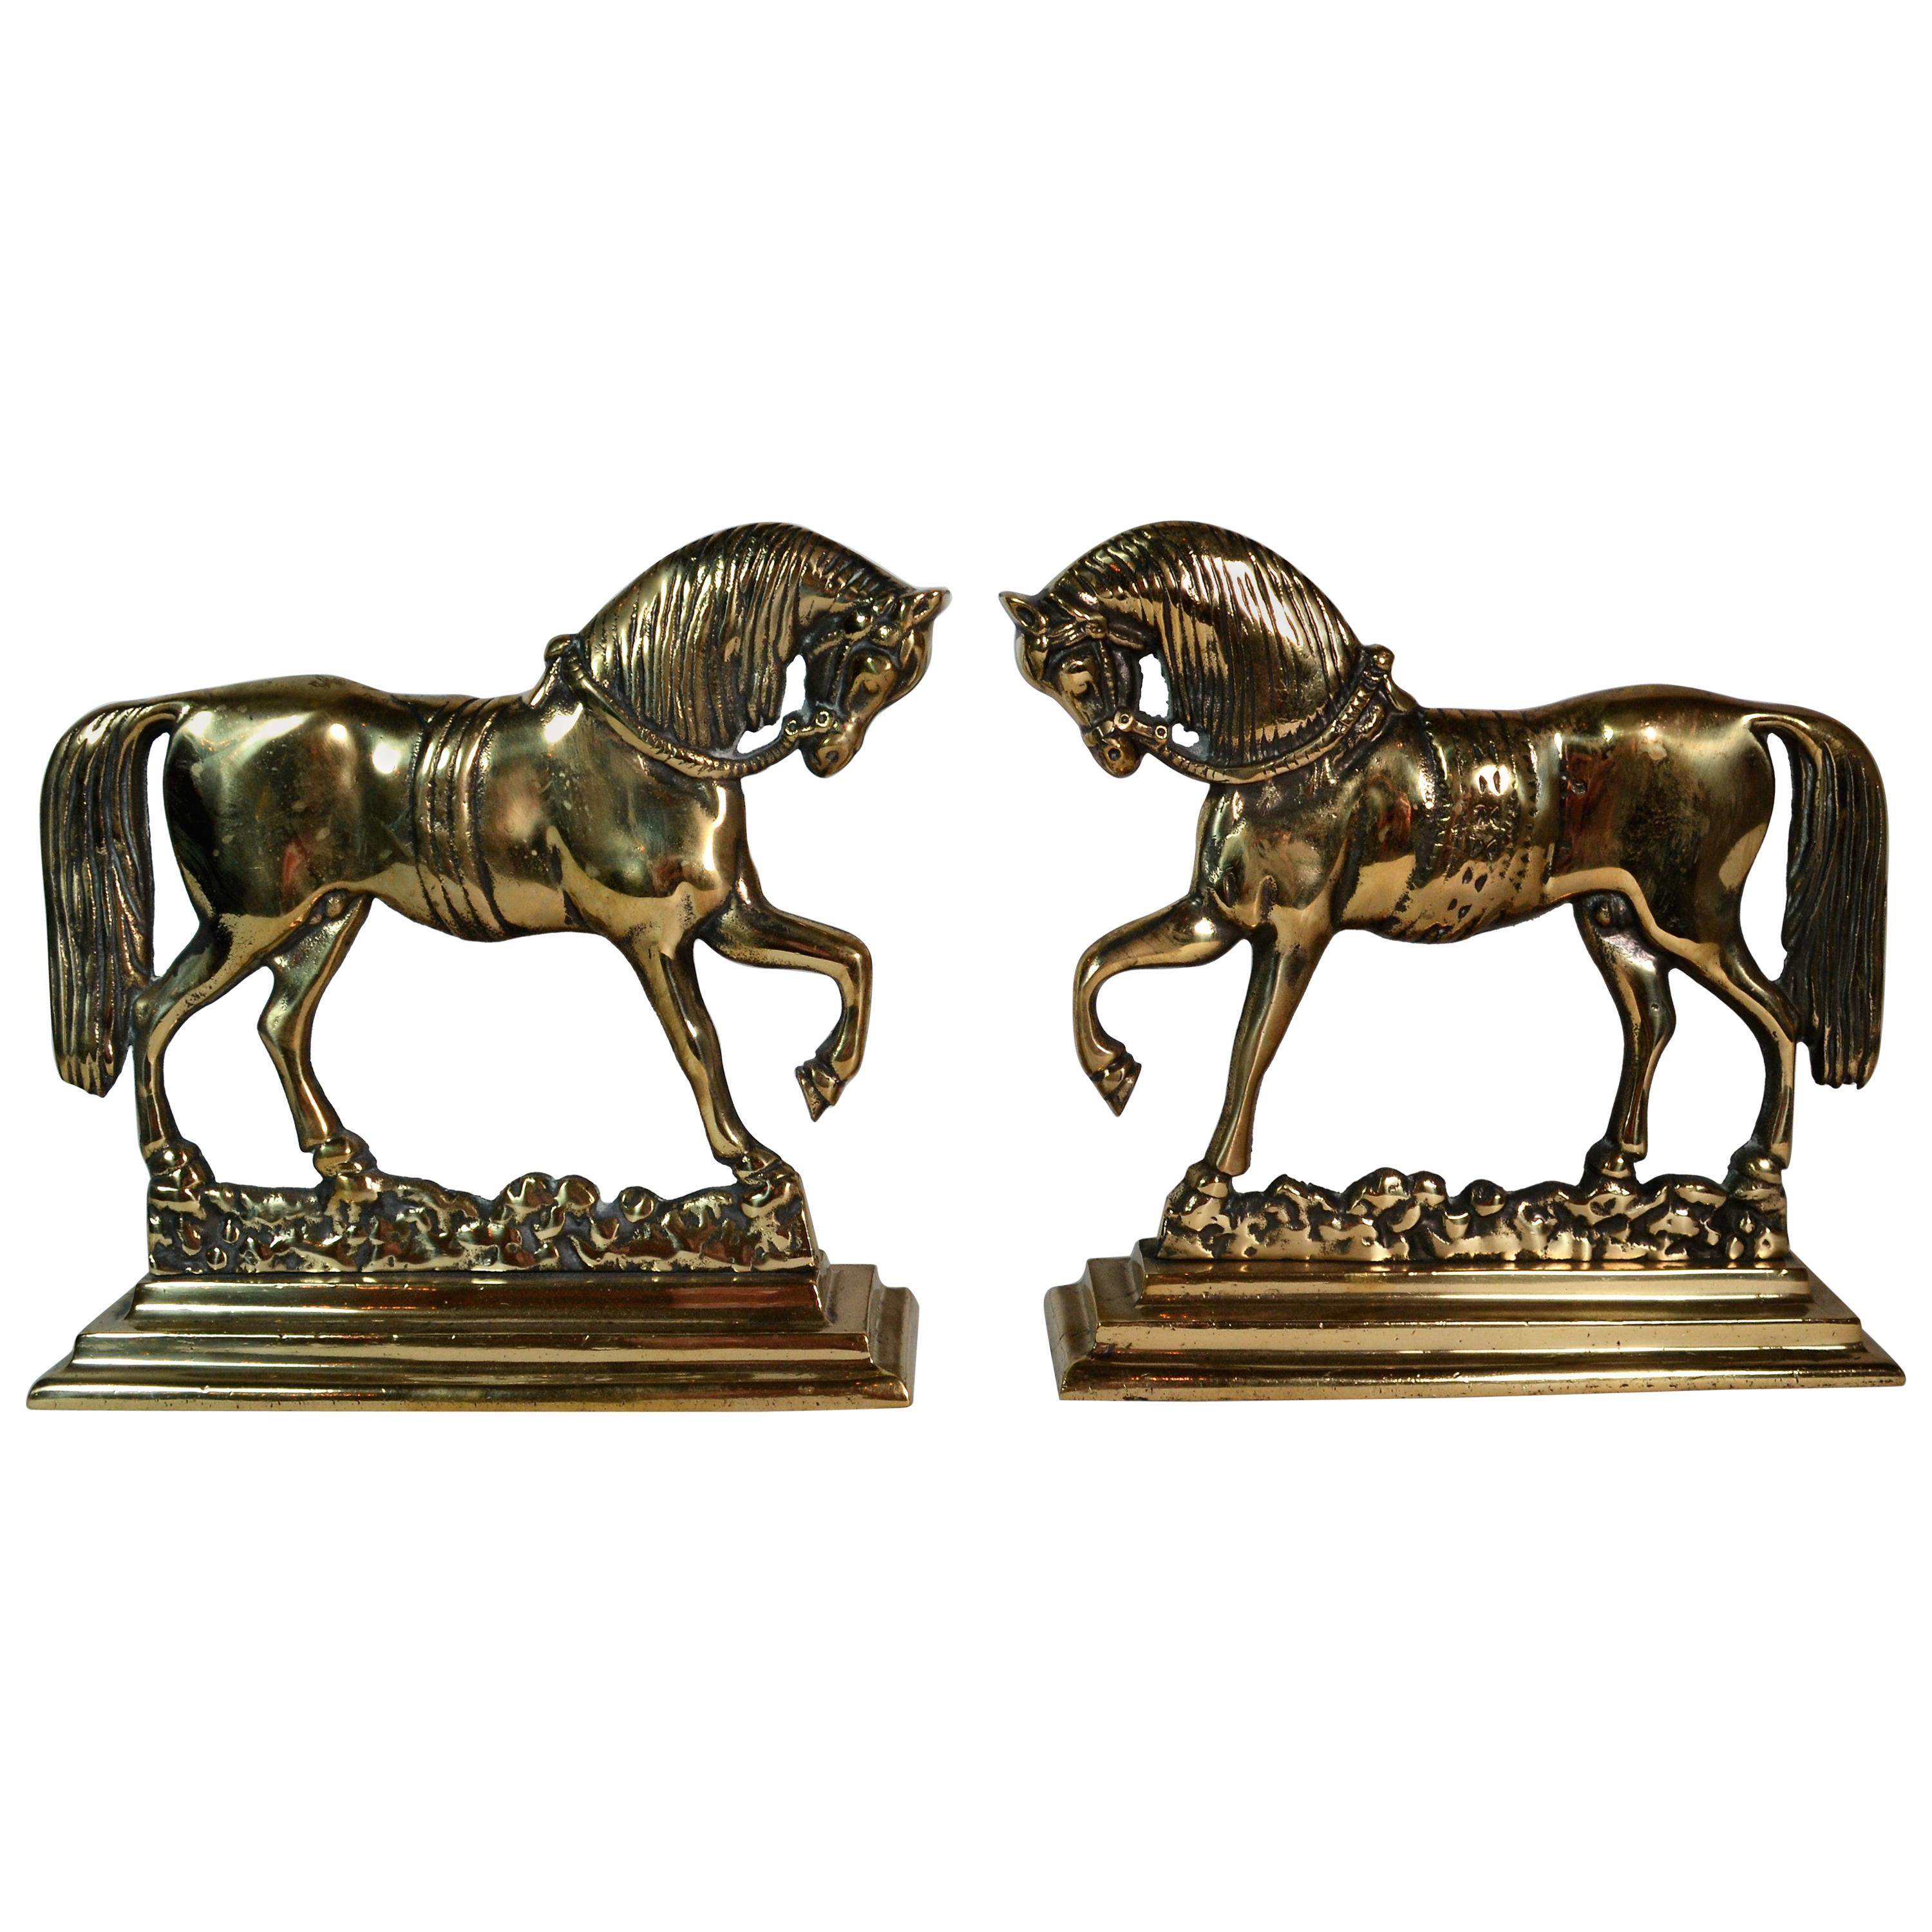 Pair of Antique English Brass Horse Bookends, circa 1870